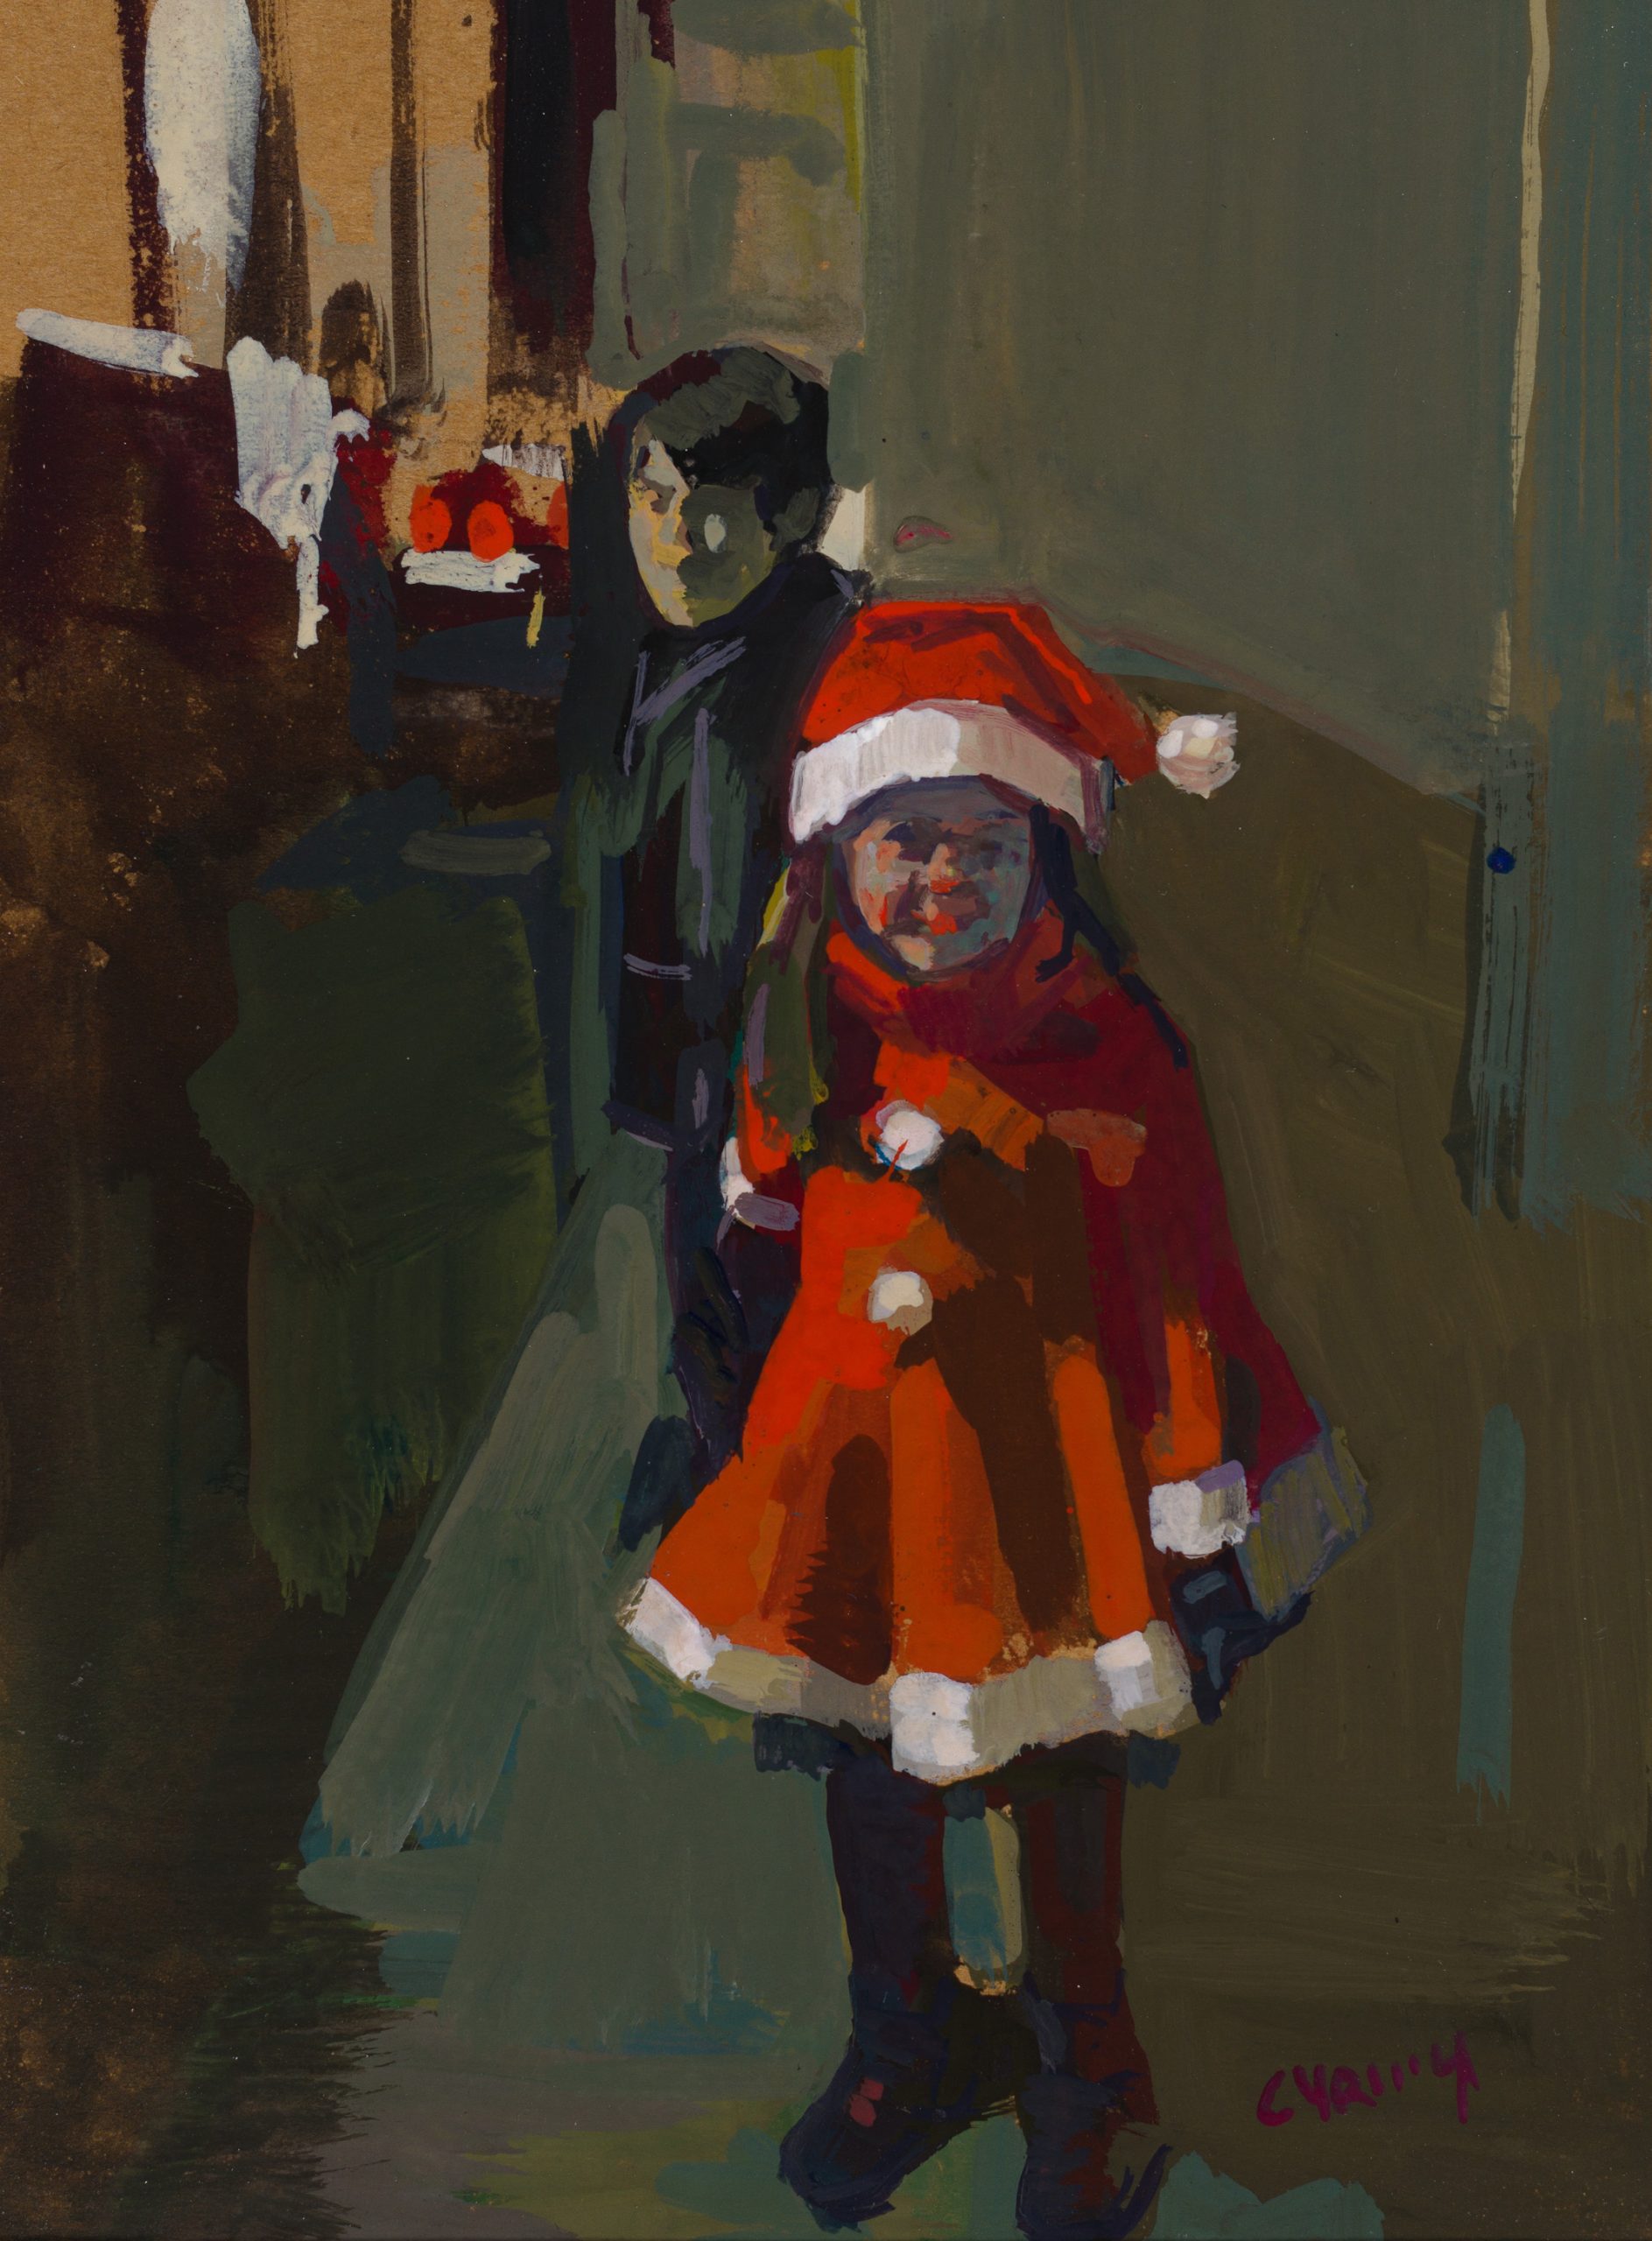 Dagmar Cyrulla 'Christmas' acrylic on panel 17.5 x 12cm $3,300